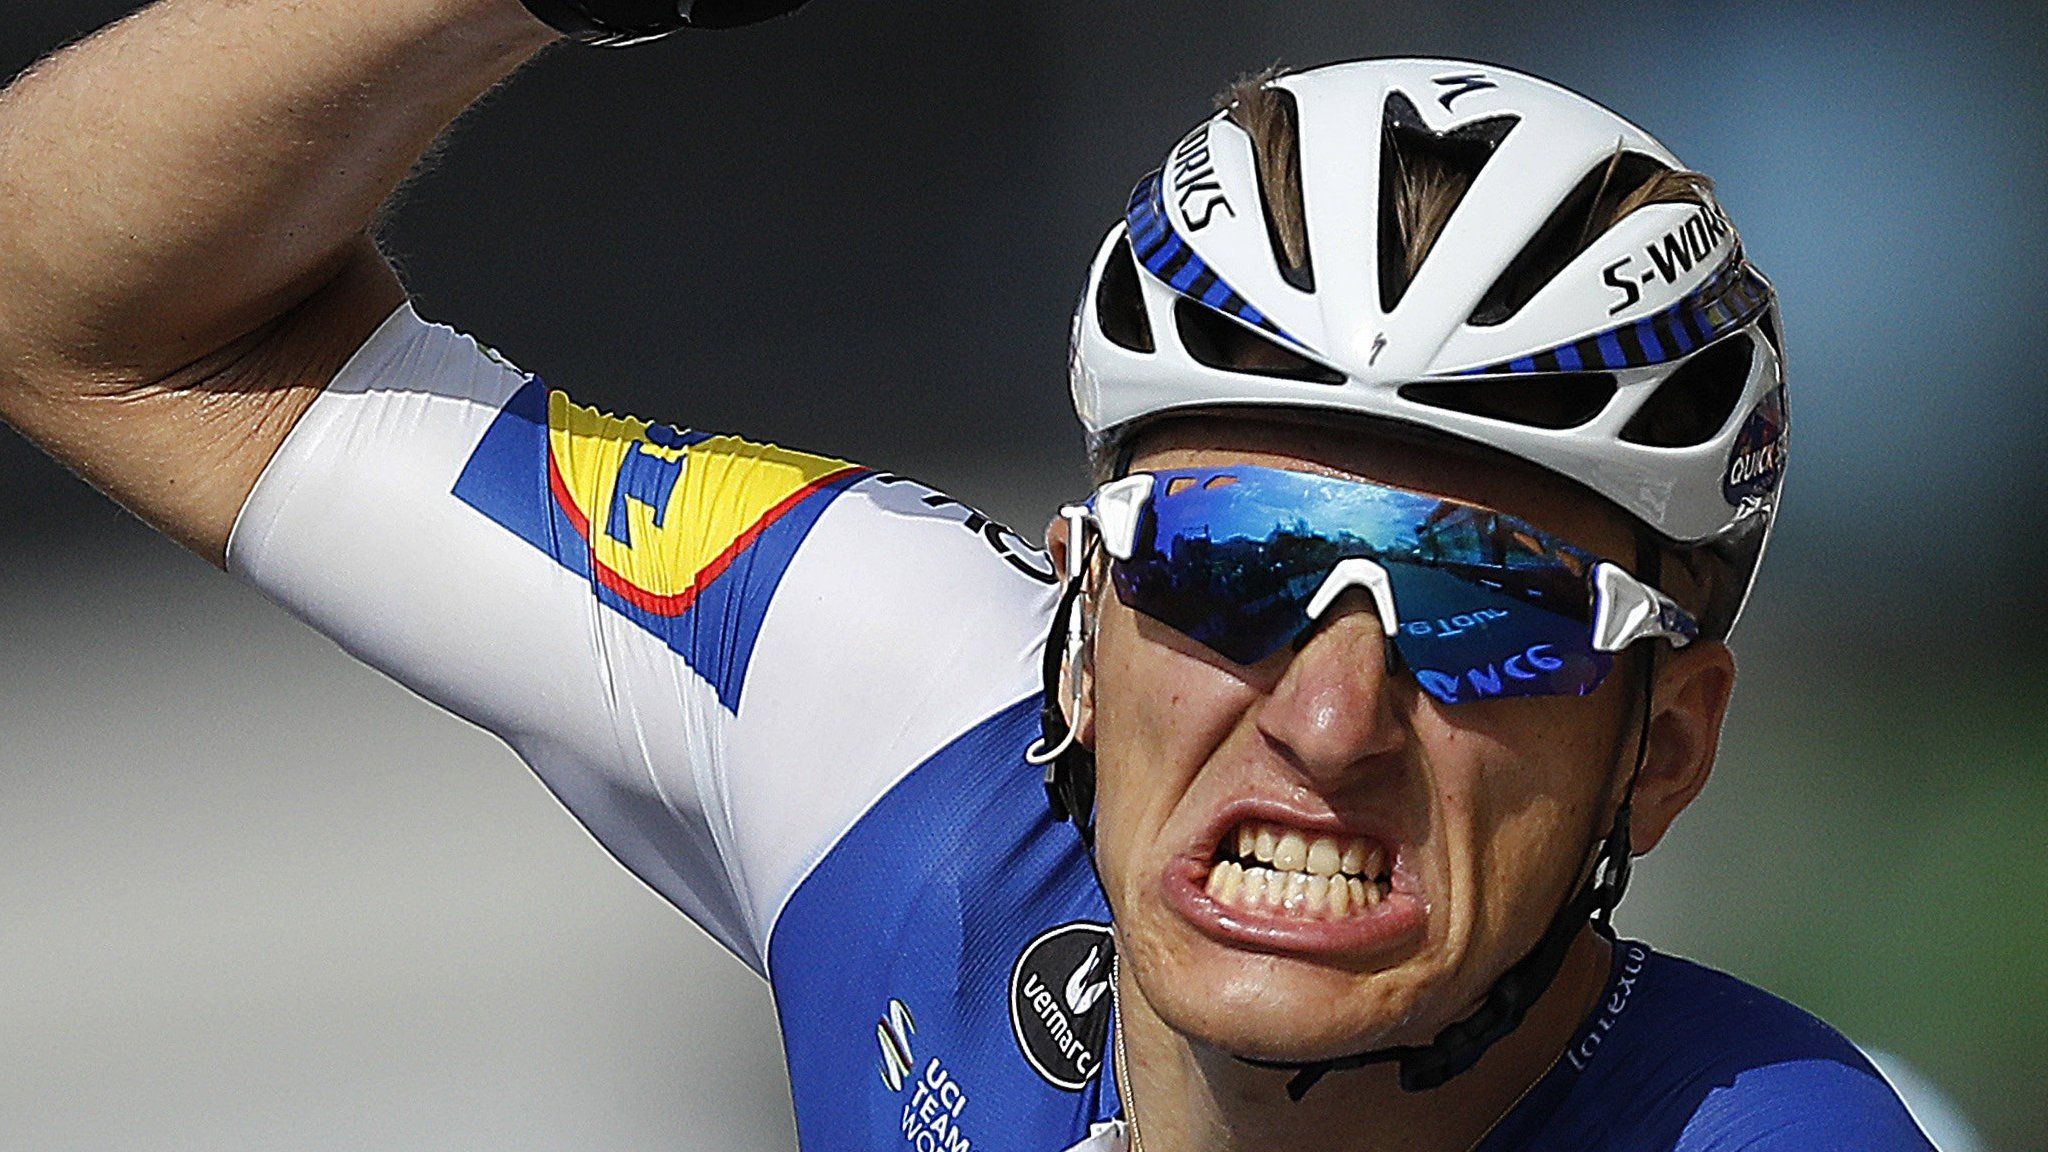 Robert Millar: Ex-Tour de France cyclist reveals new identity as ...